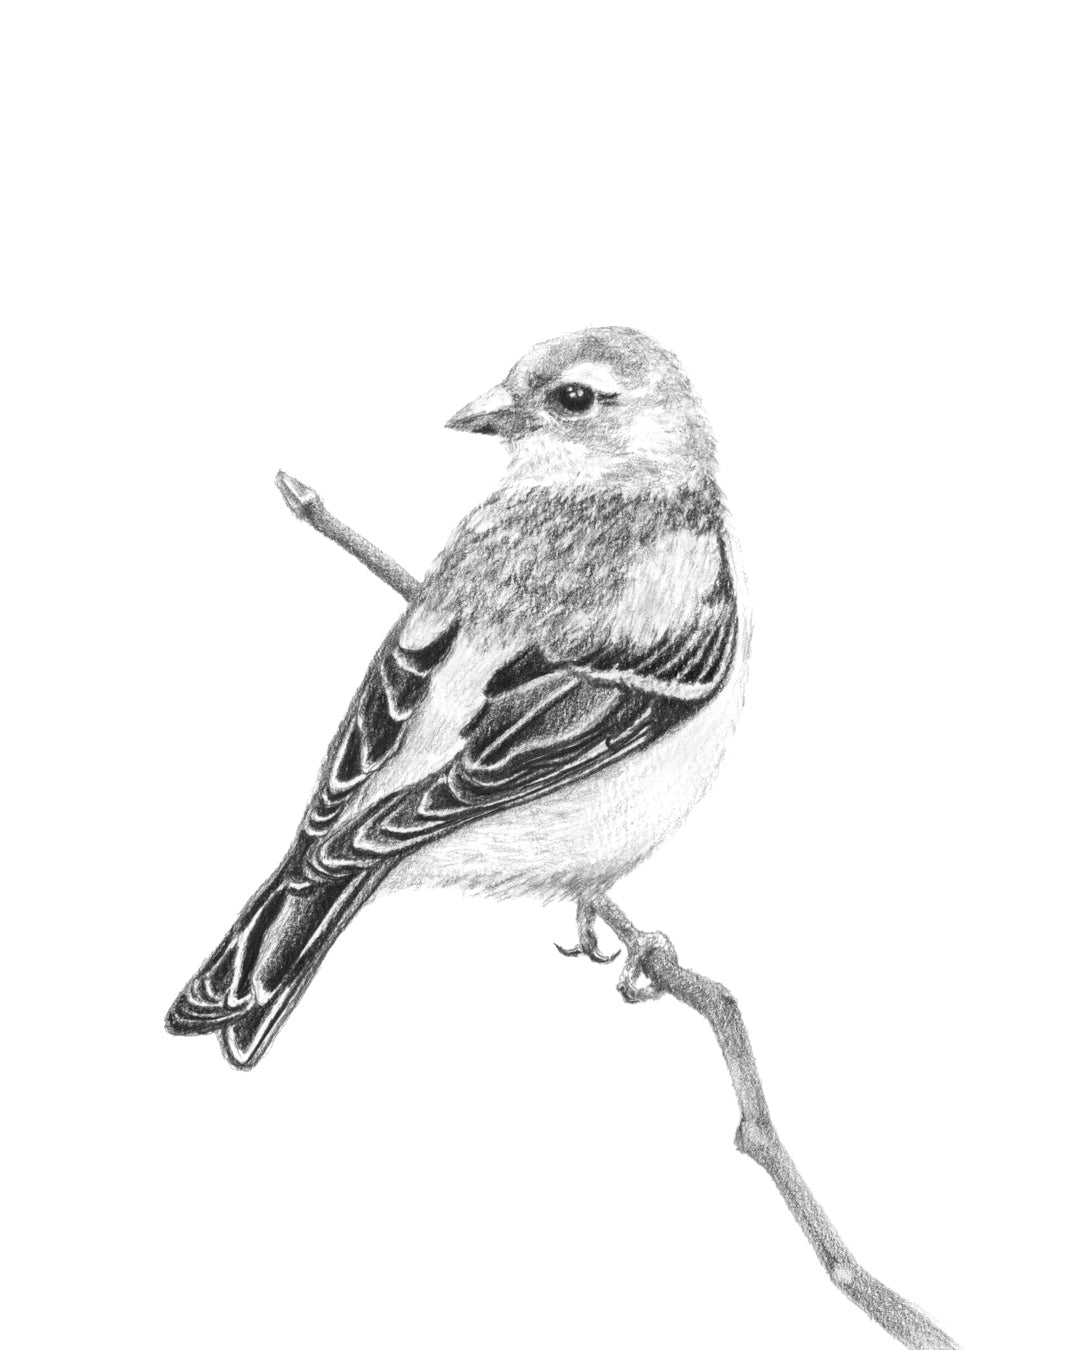 Beautiful Bird Drawing And Art Work | Incredible Snaps